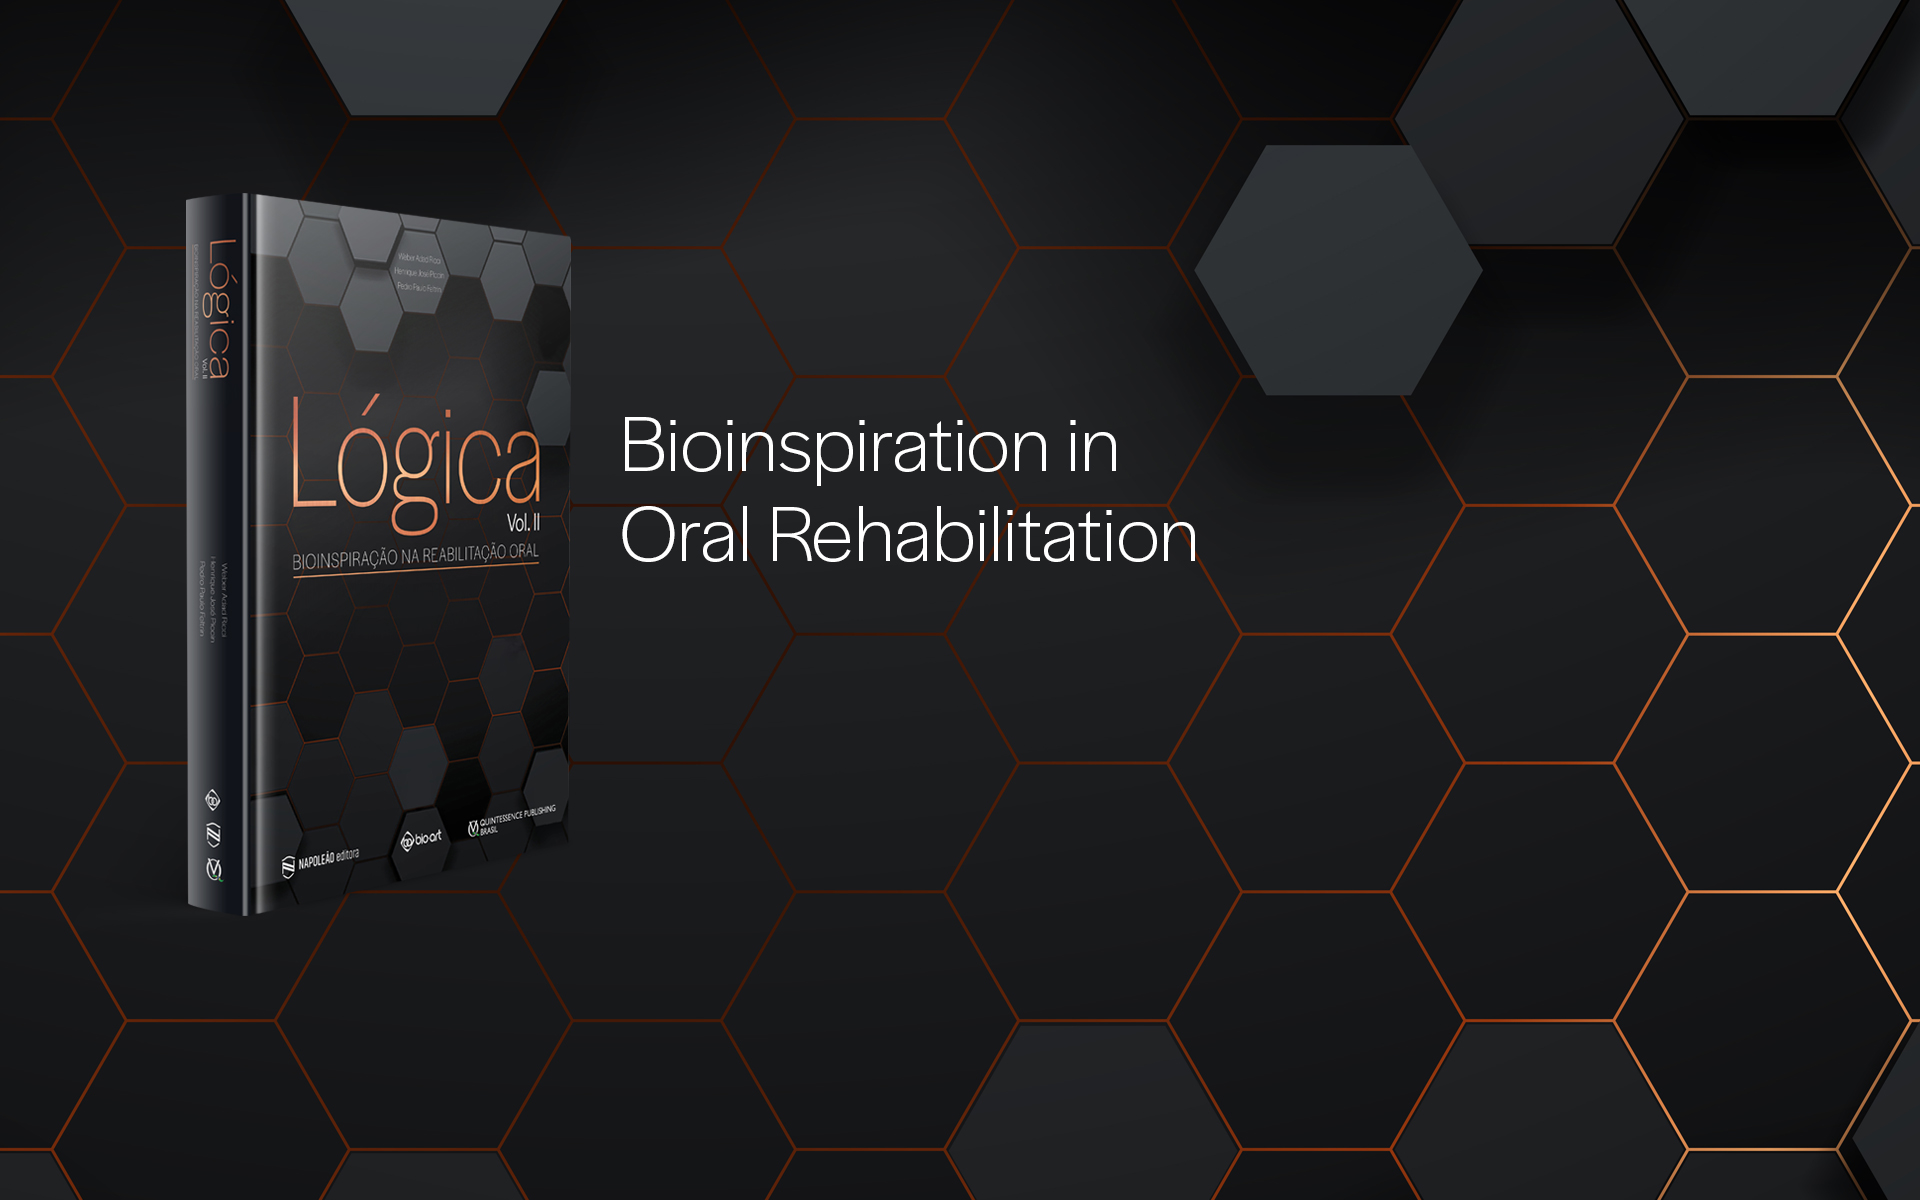 Logical Bioinspiration in Oral Rehabilitation